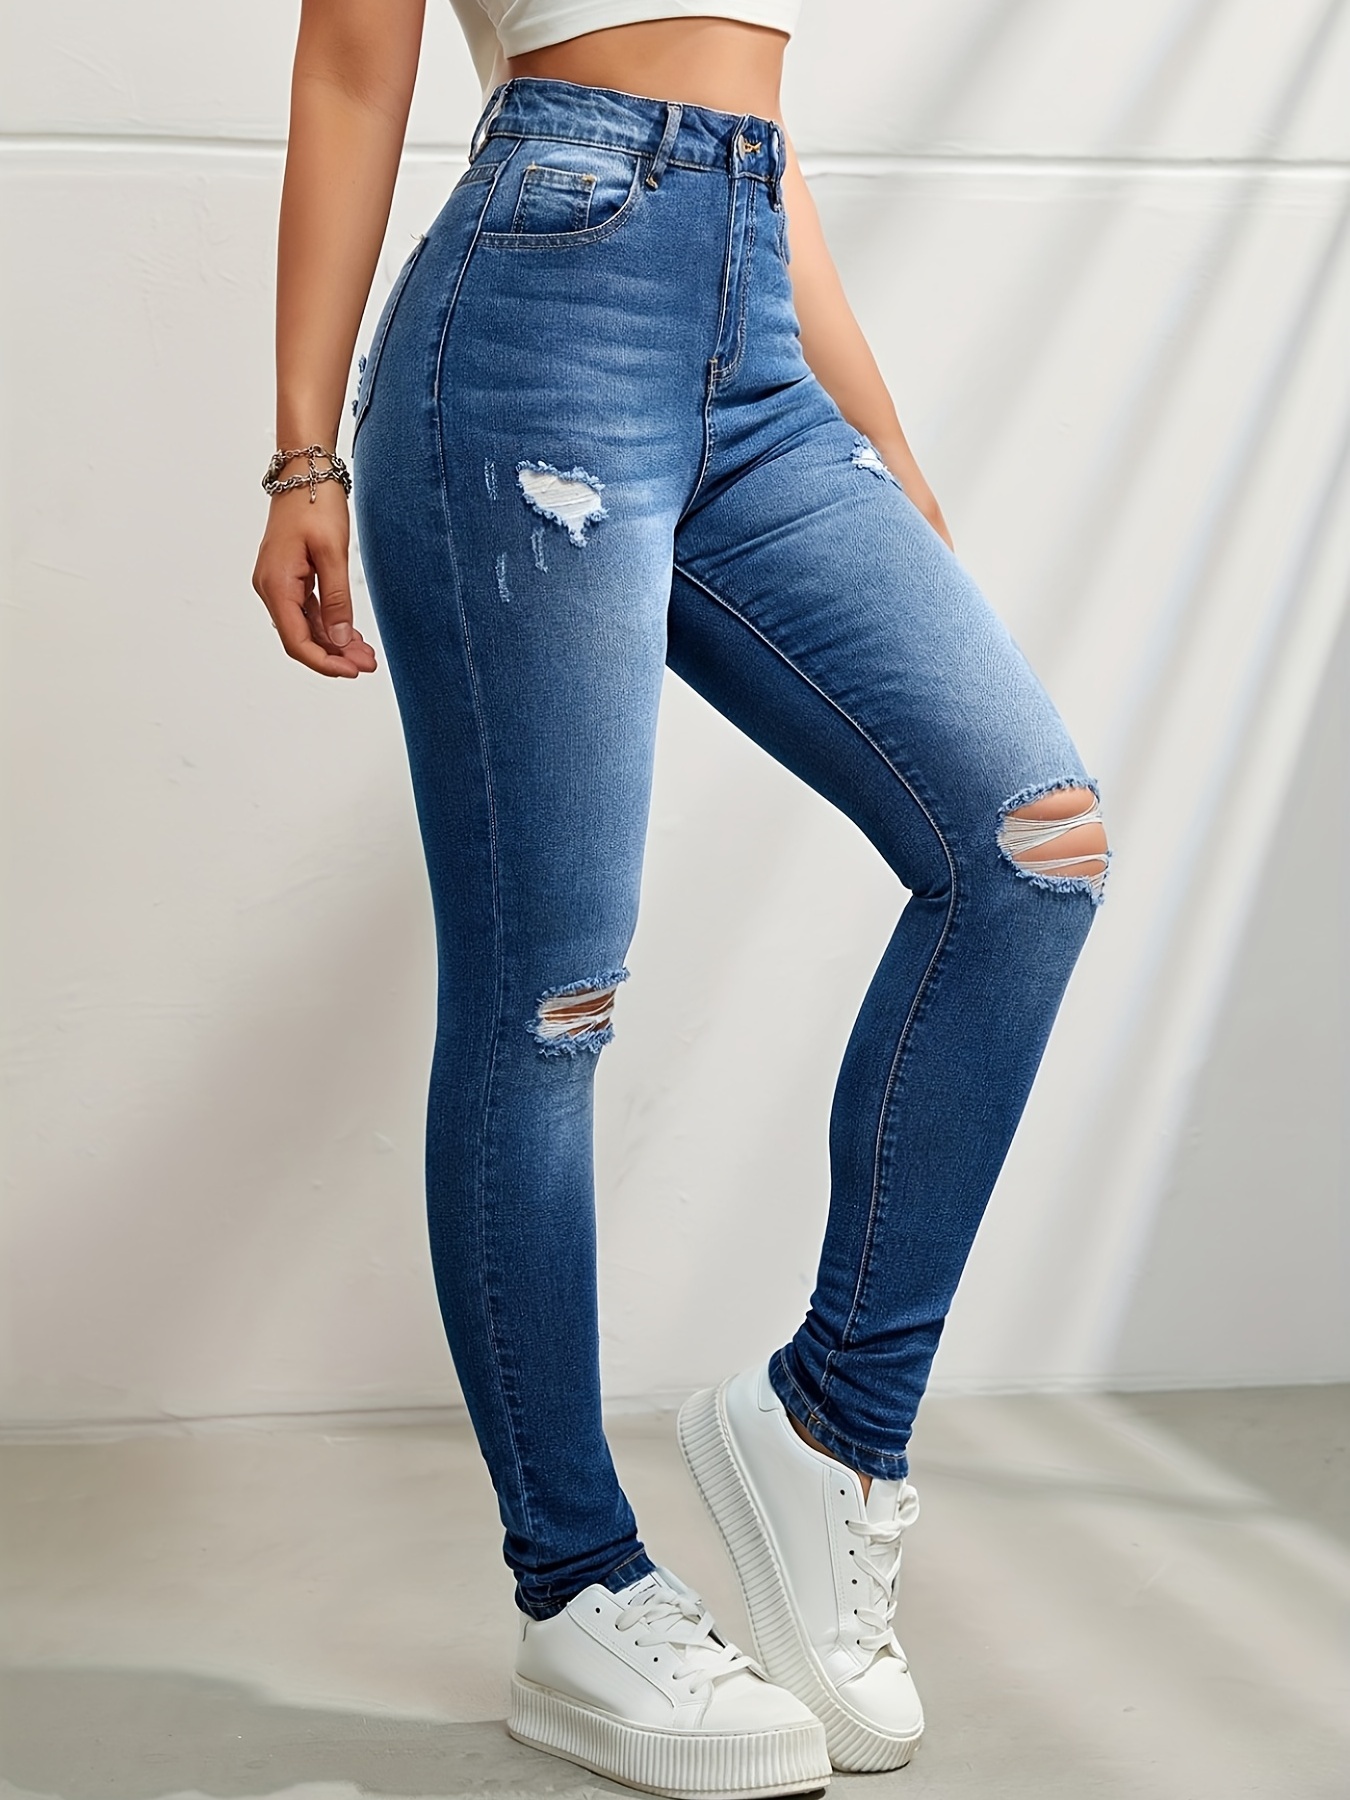 Mguotp Women Pants Skinny Slim Denim Stretch Pencil Hole Jeans